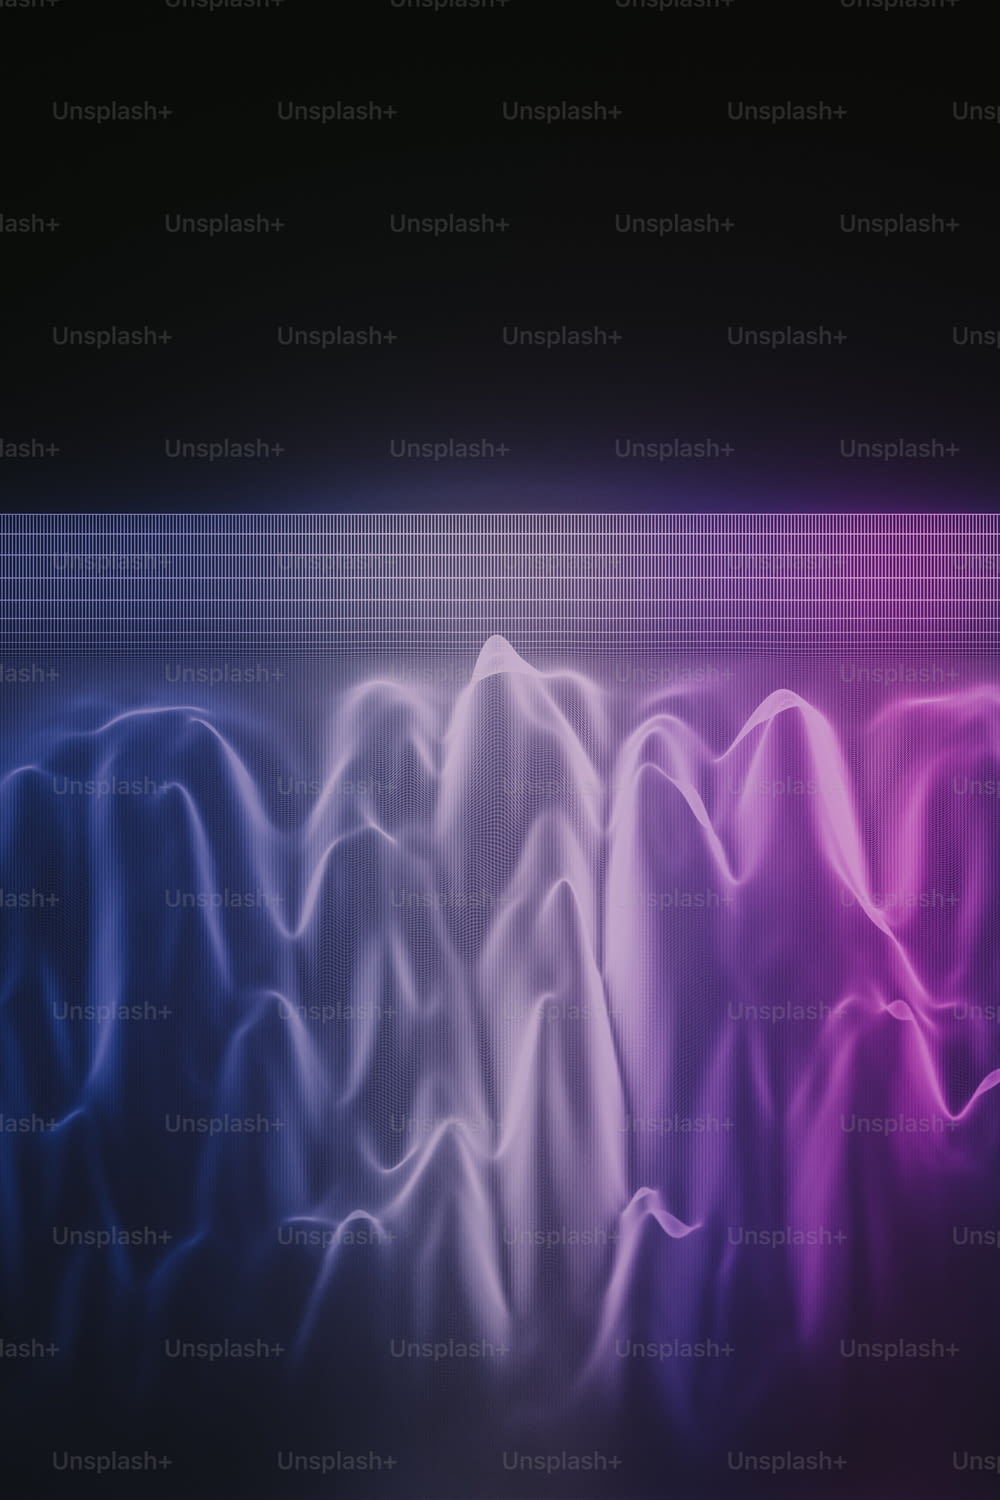 Un'immagine generata al computer di un'onda in viola e blu